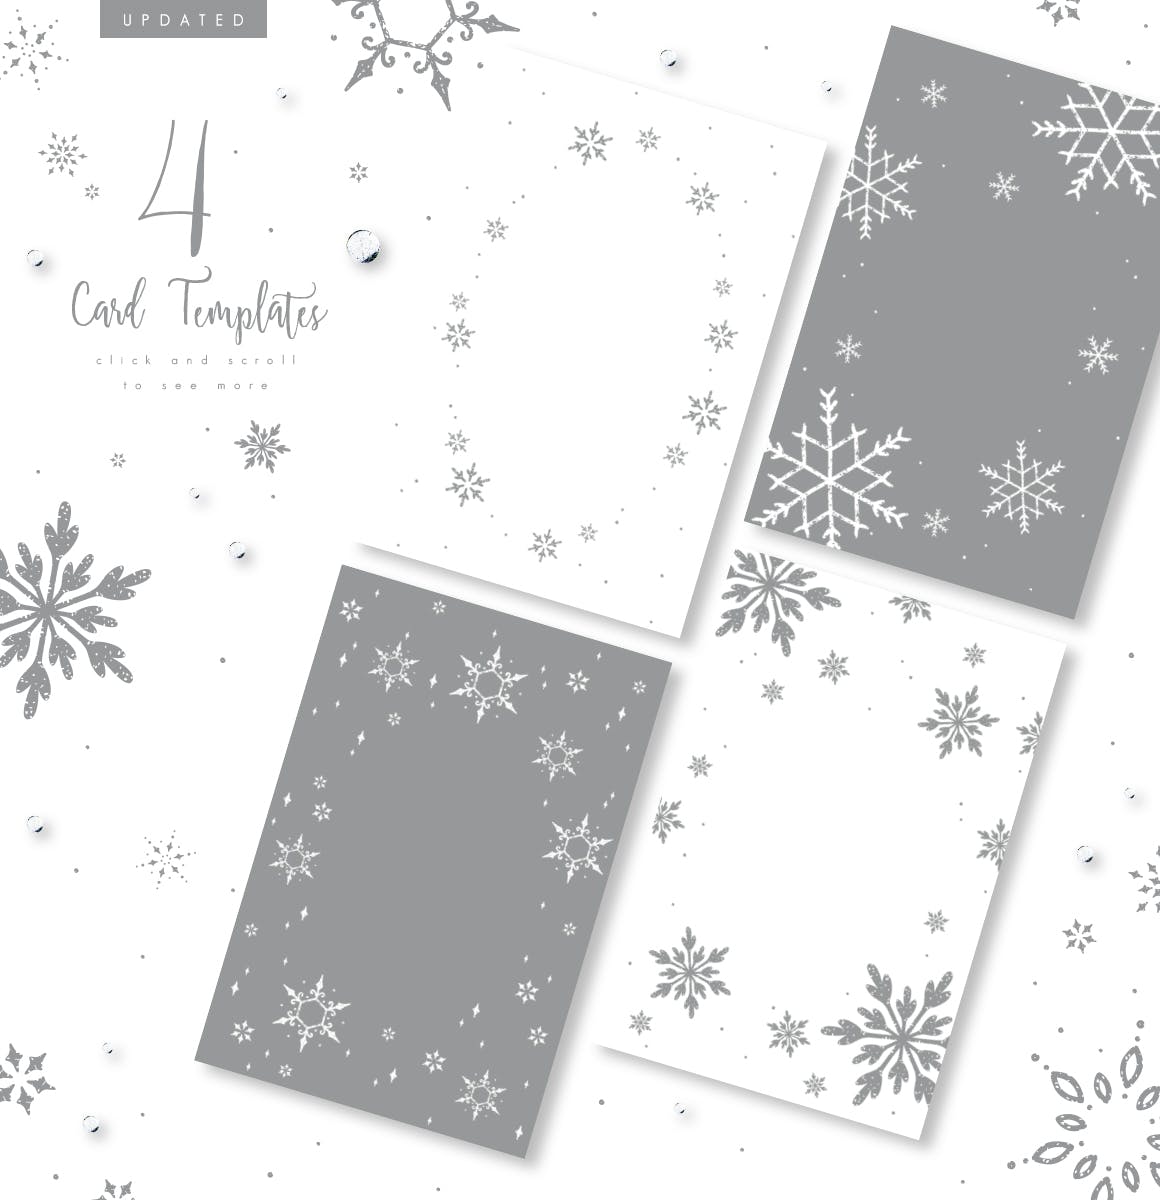 雪花之吻冬季主题手绘图案背景素材 UPDATED+ Snowflakes Winter Kisses插图5